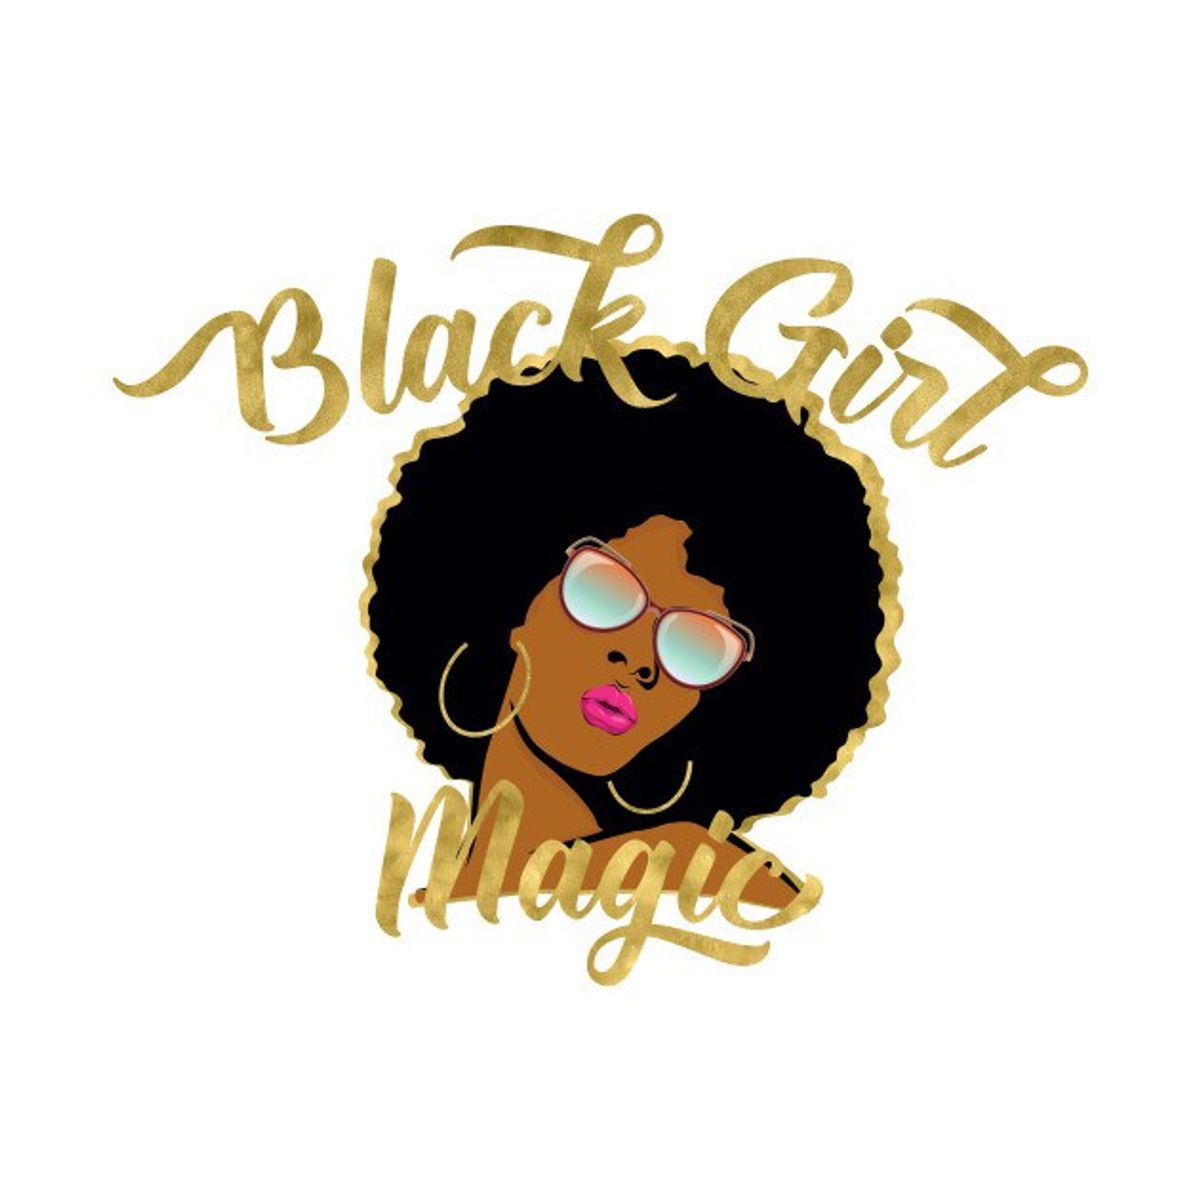 #BlackGirlMagic